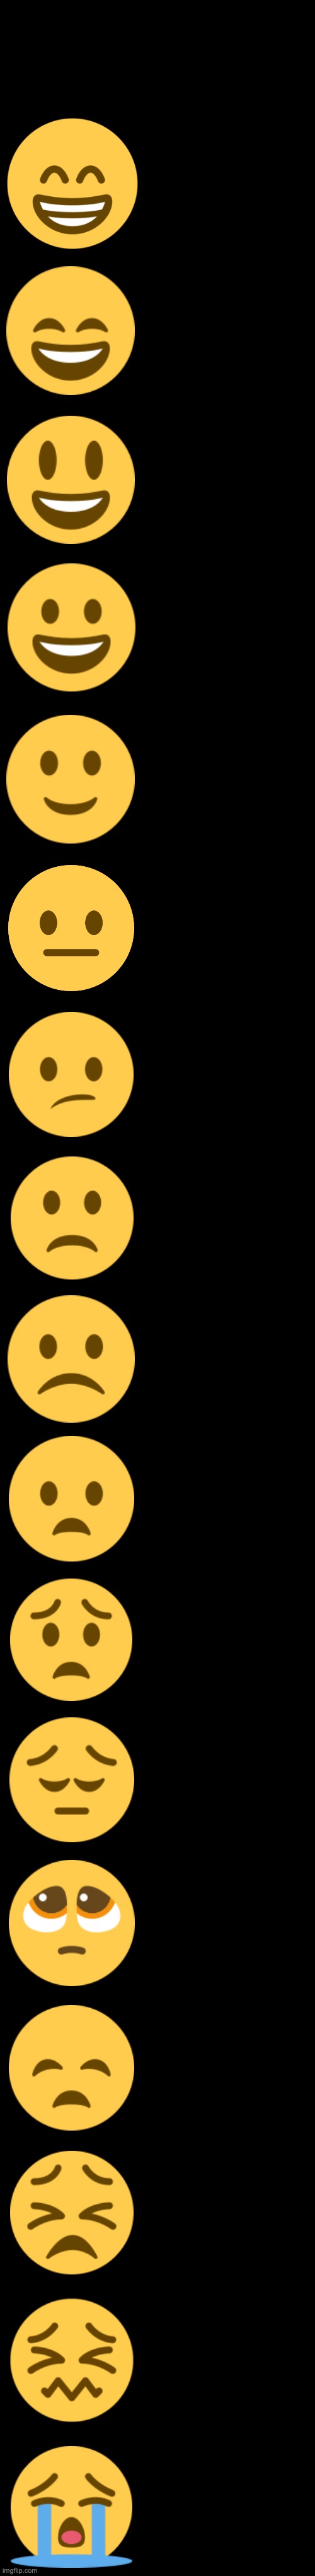 Emoji Becoming Sad Extended Blank Meme Template